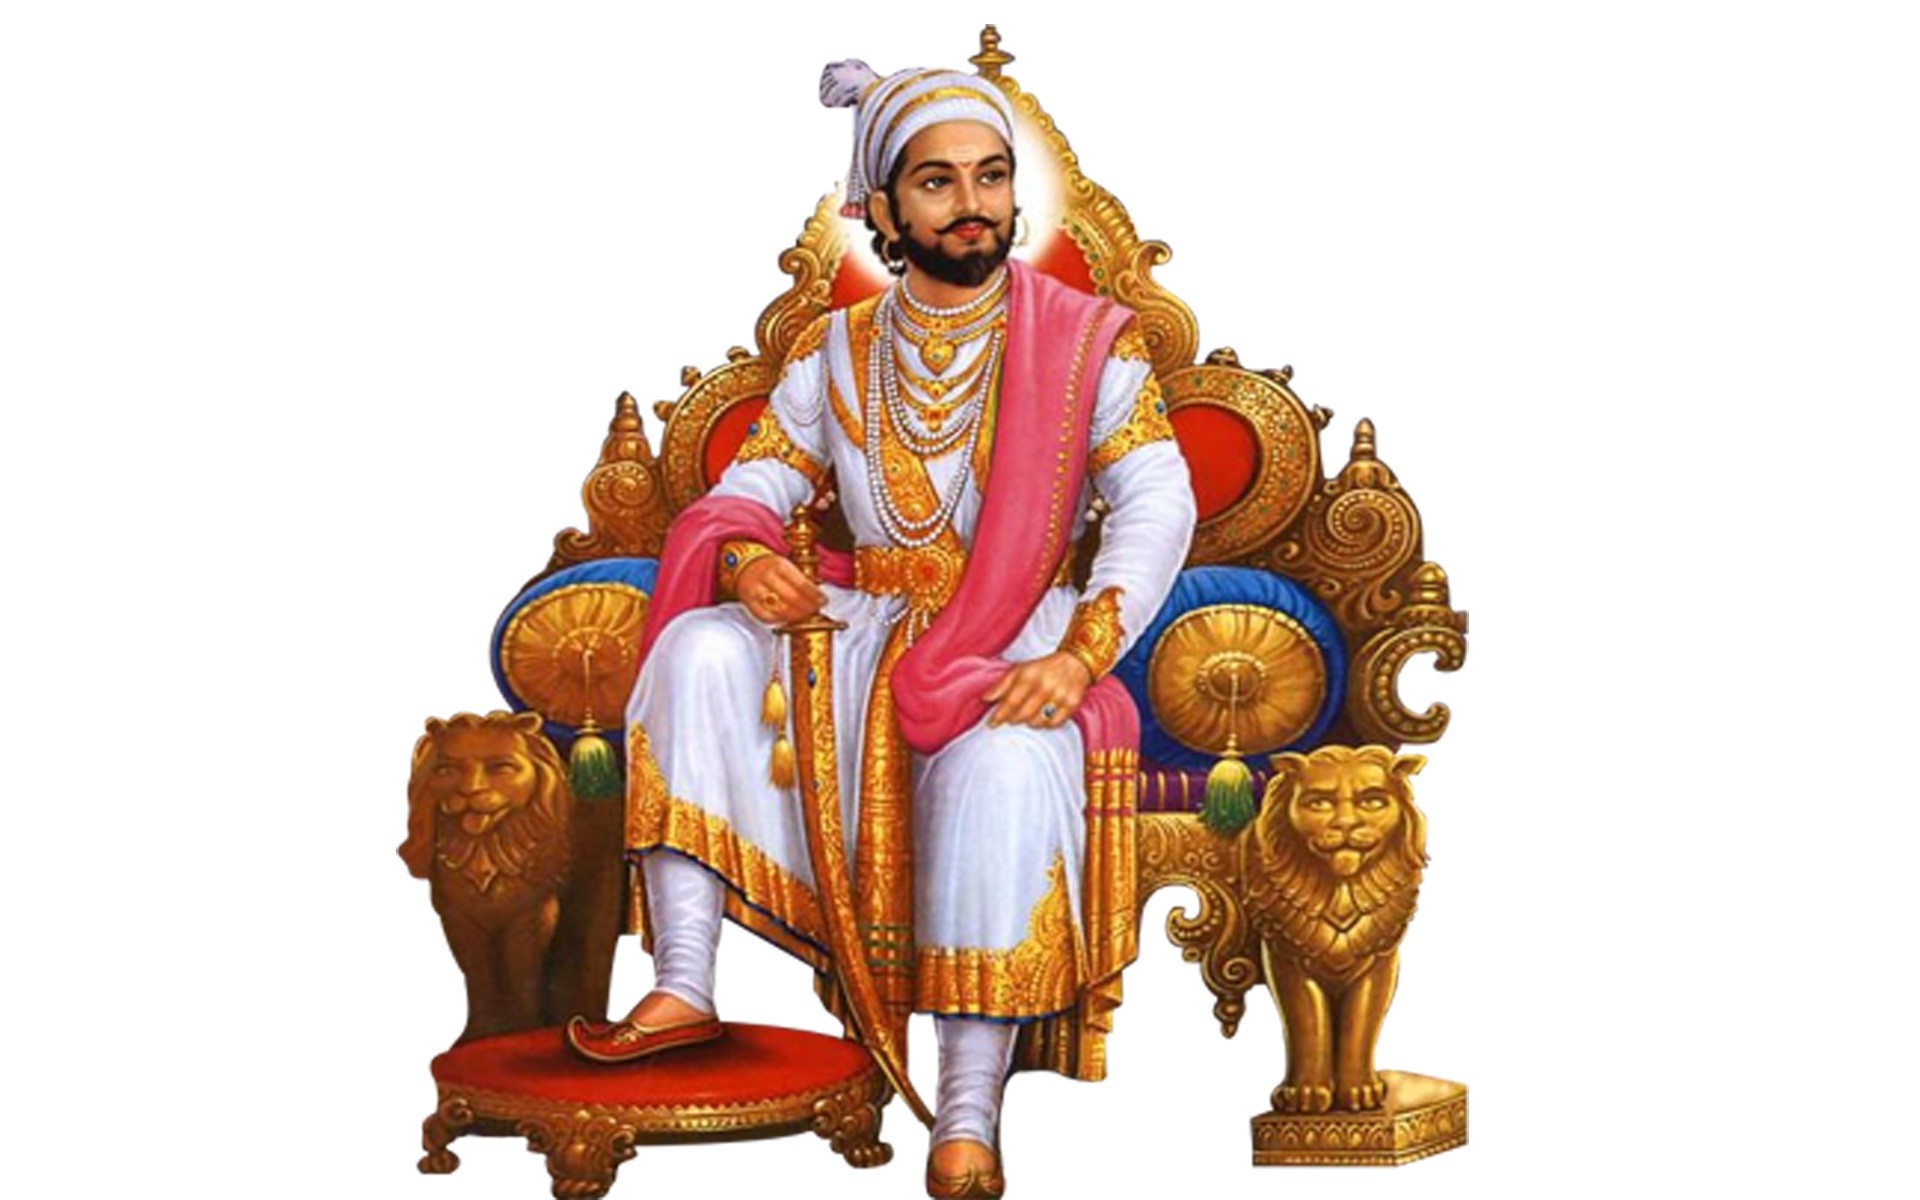 Shivaji Maharaj Wallpaper Image for PC Download